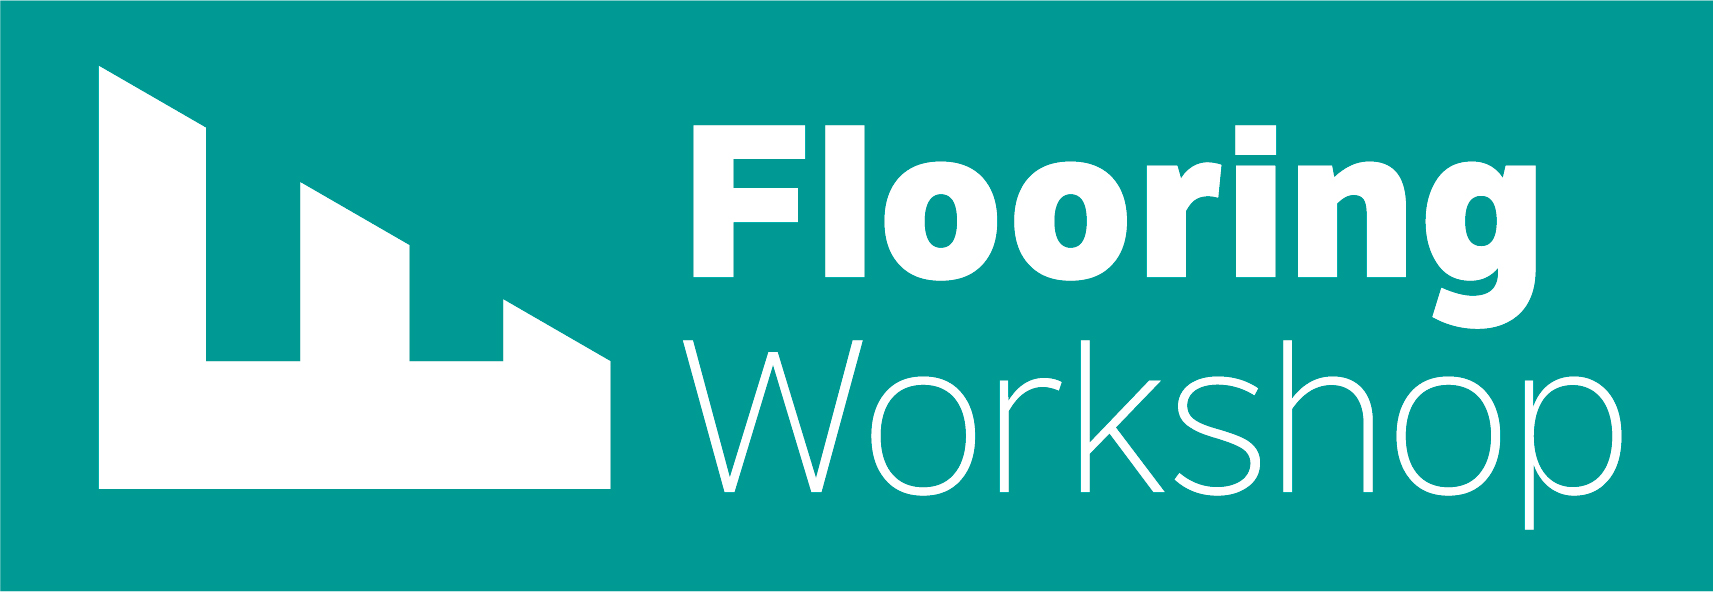 Flooring Workshop logo